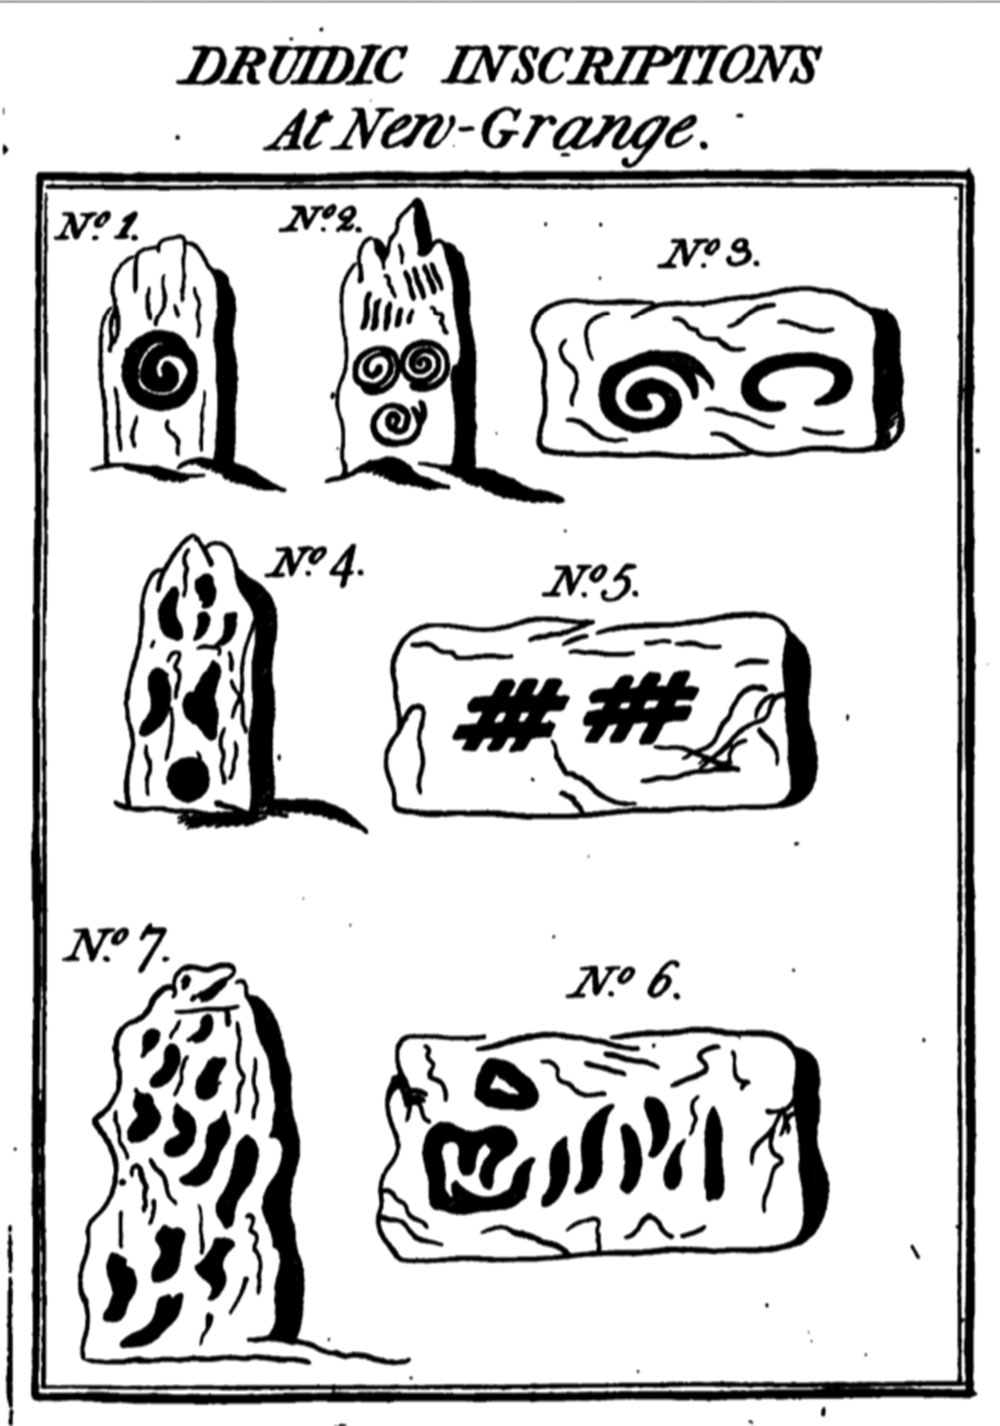 Druidic inscriptions form Newgrange, illustration from Charles Vallancey's Collectanea de Rebus Hibernicus, 1790.